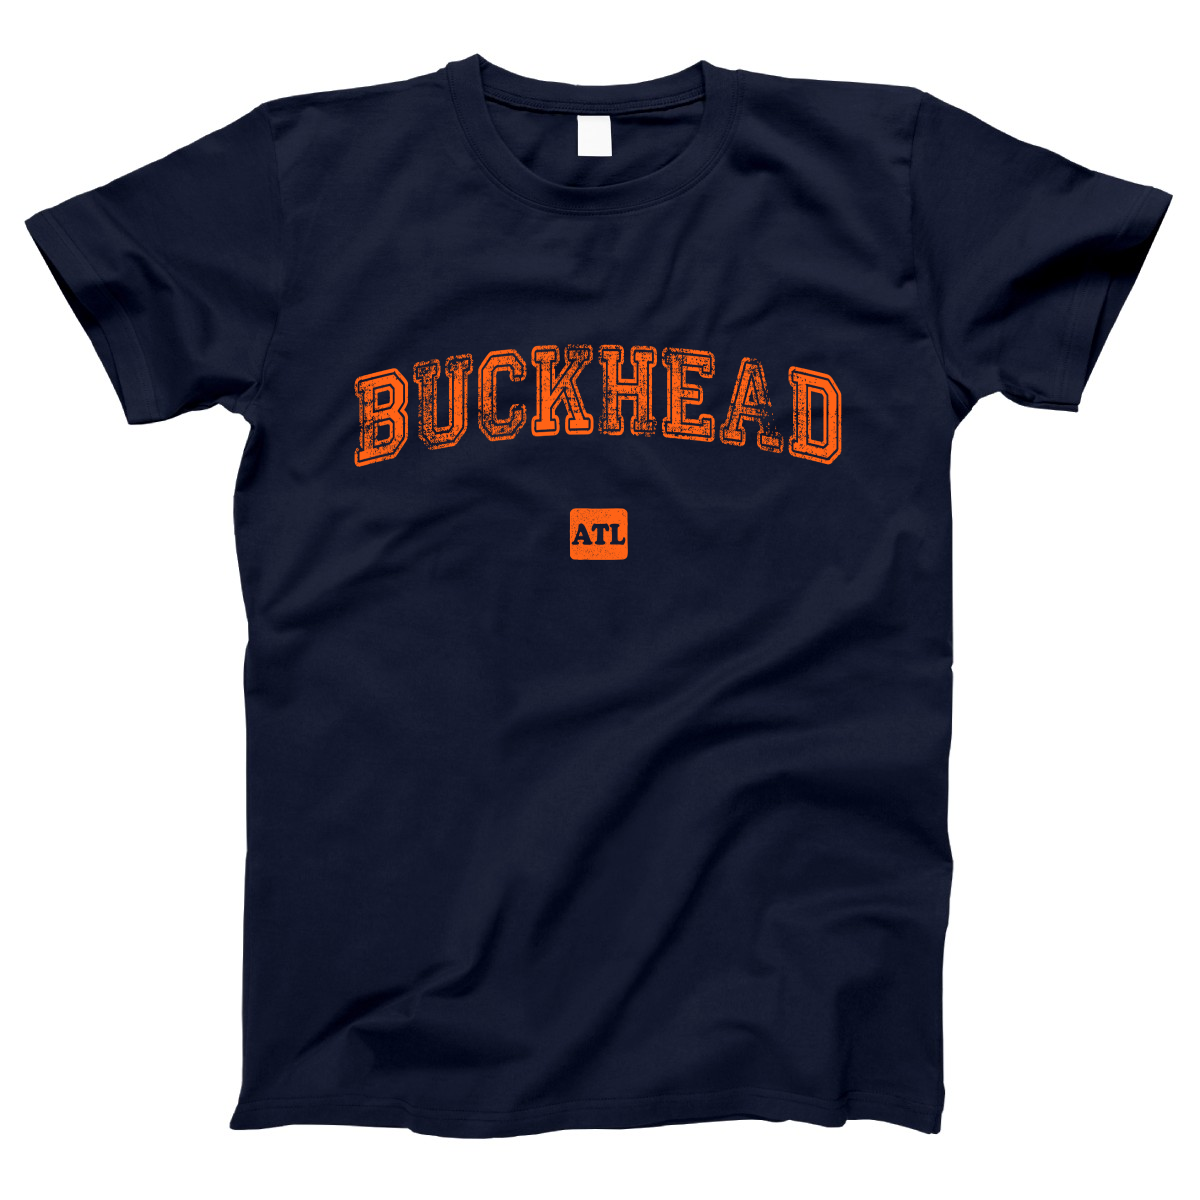 Buckhead ATL Represent Women's T-shirt | Navy